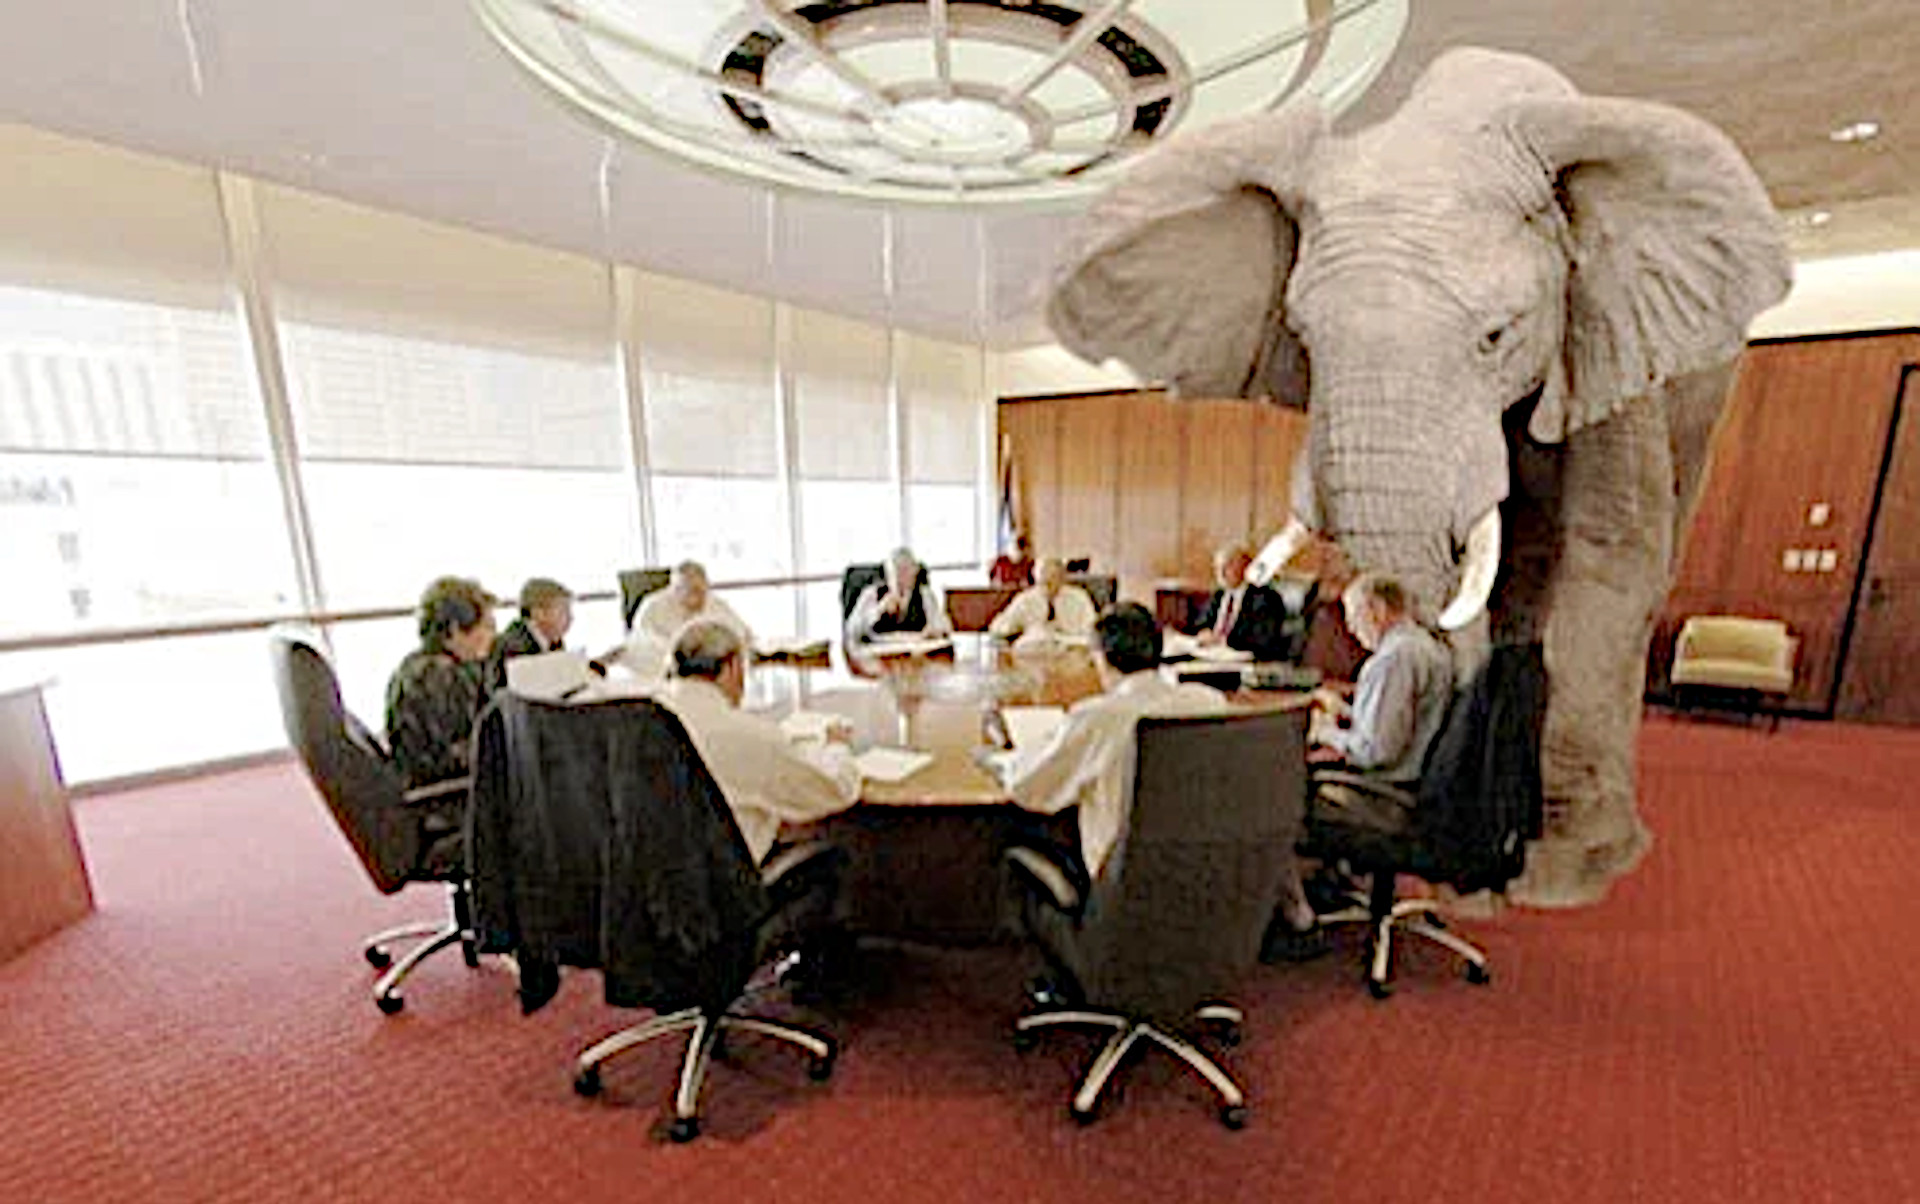 De olifant in de kamer - 14433